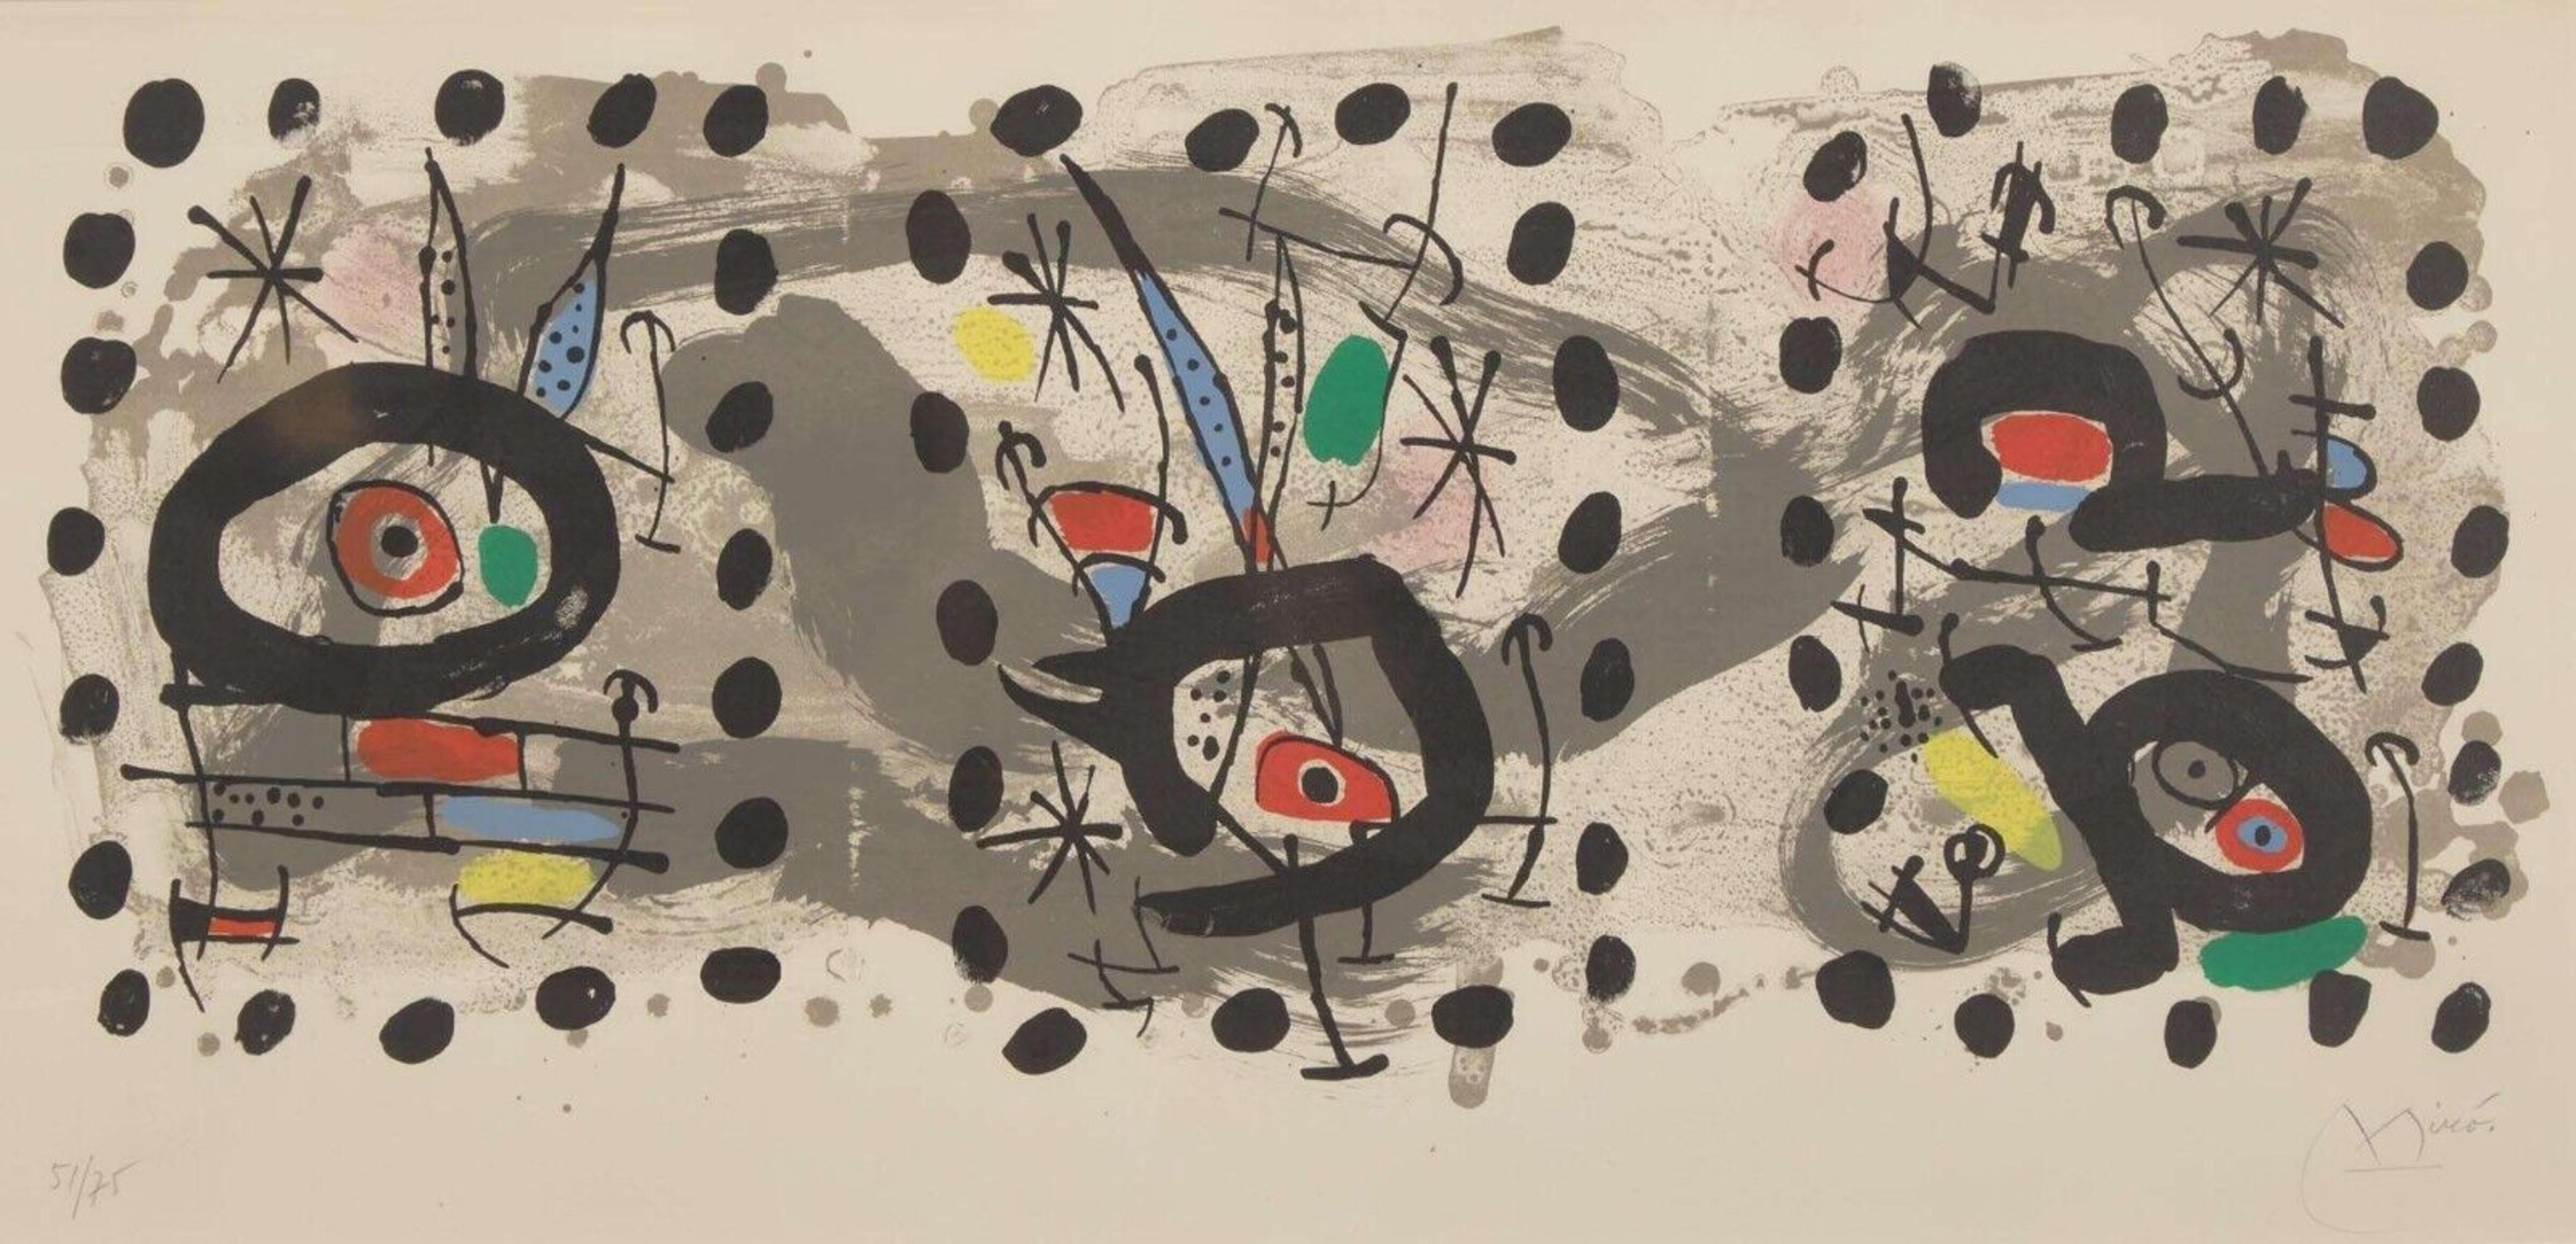 Solar Bird, Lunar Bird, Sparks - Print by Joan Miró